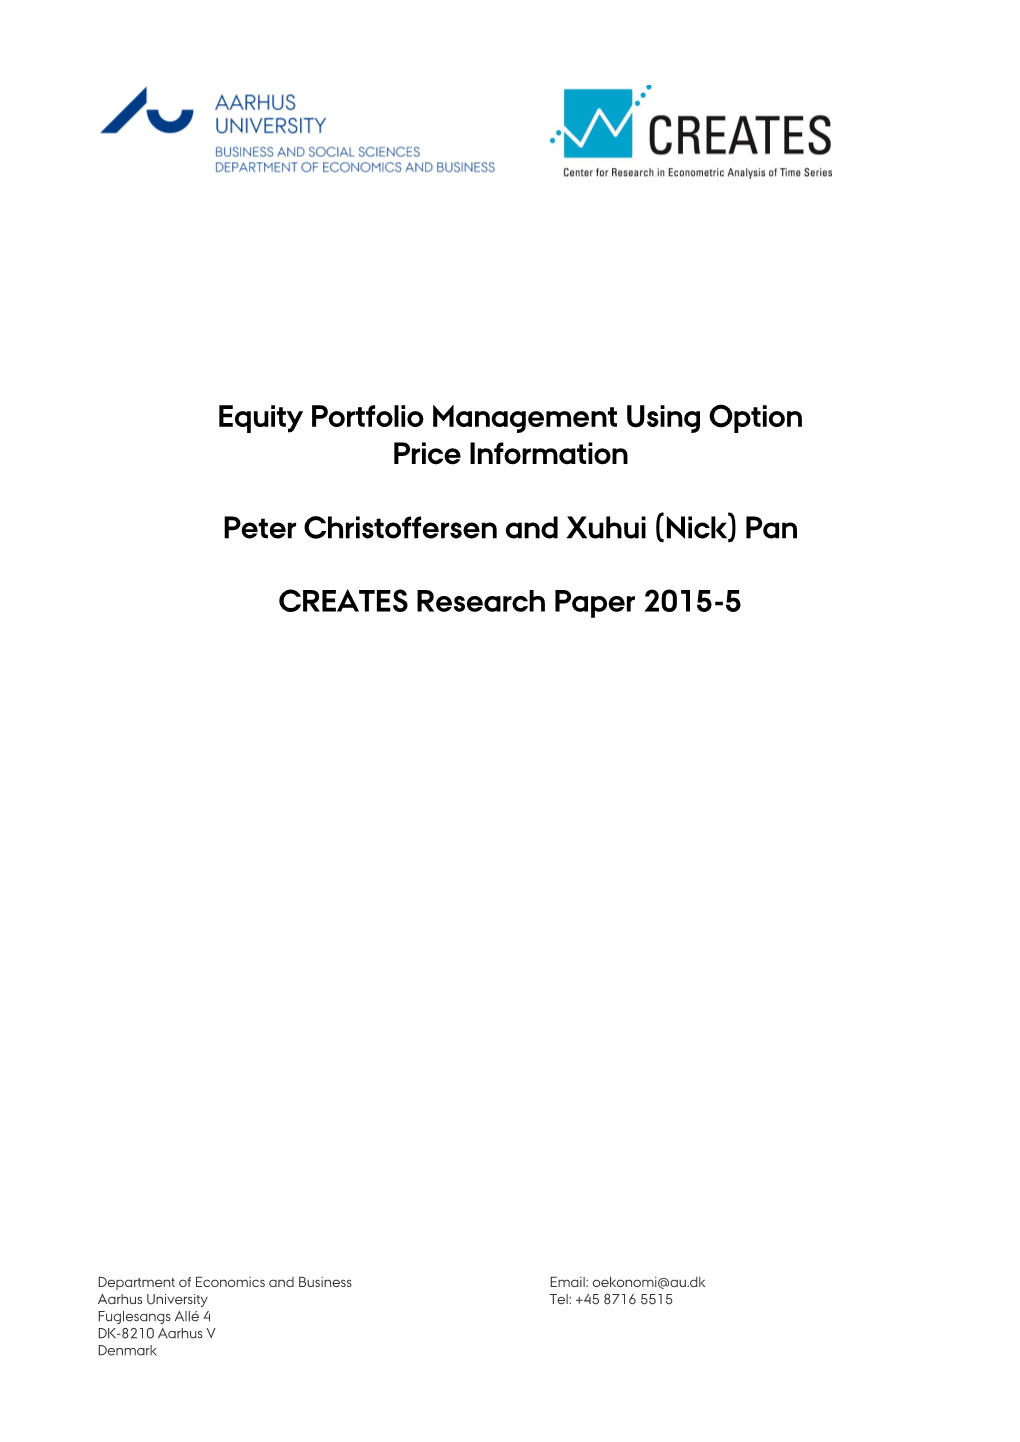 Equity Portfolio Management Using Option Price Information